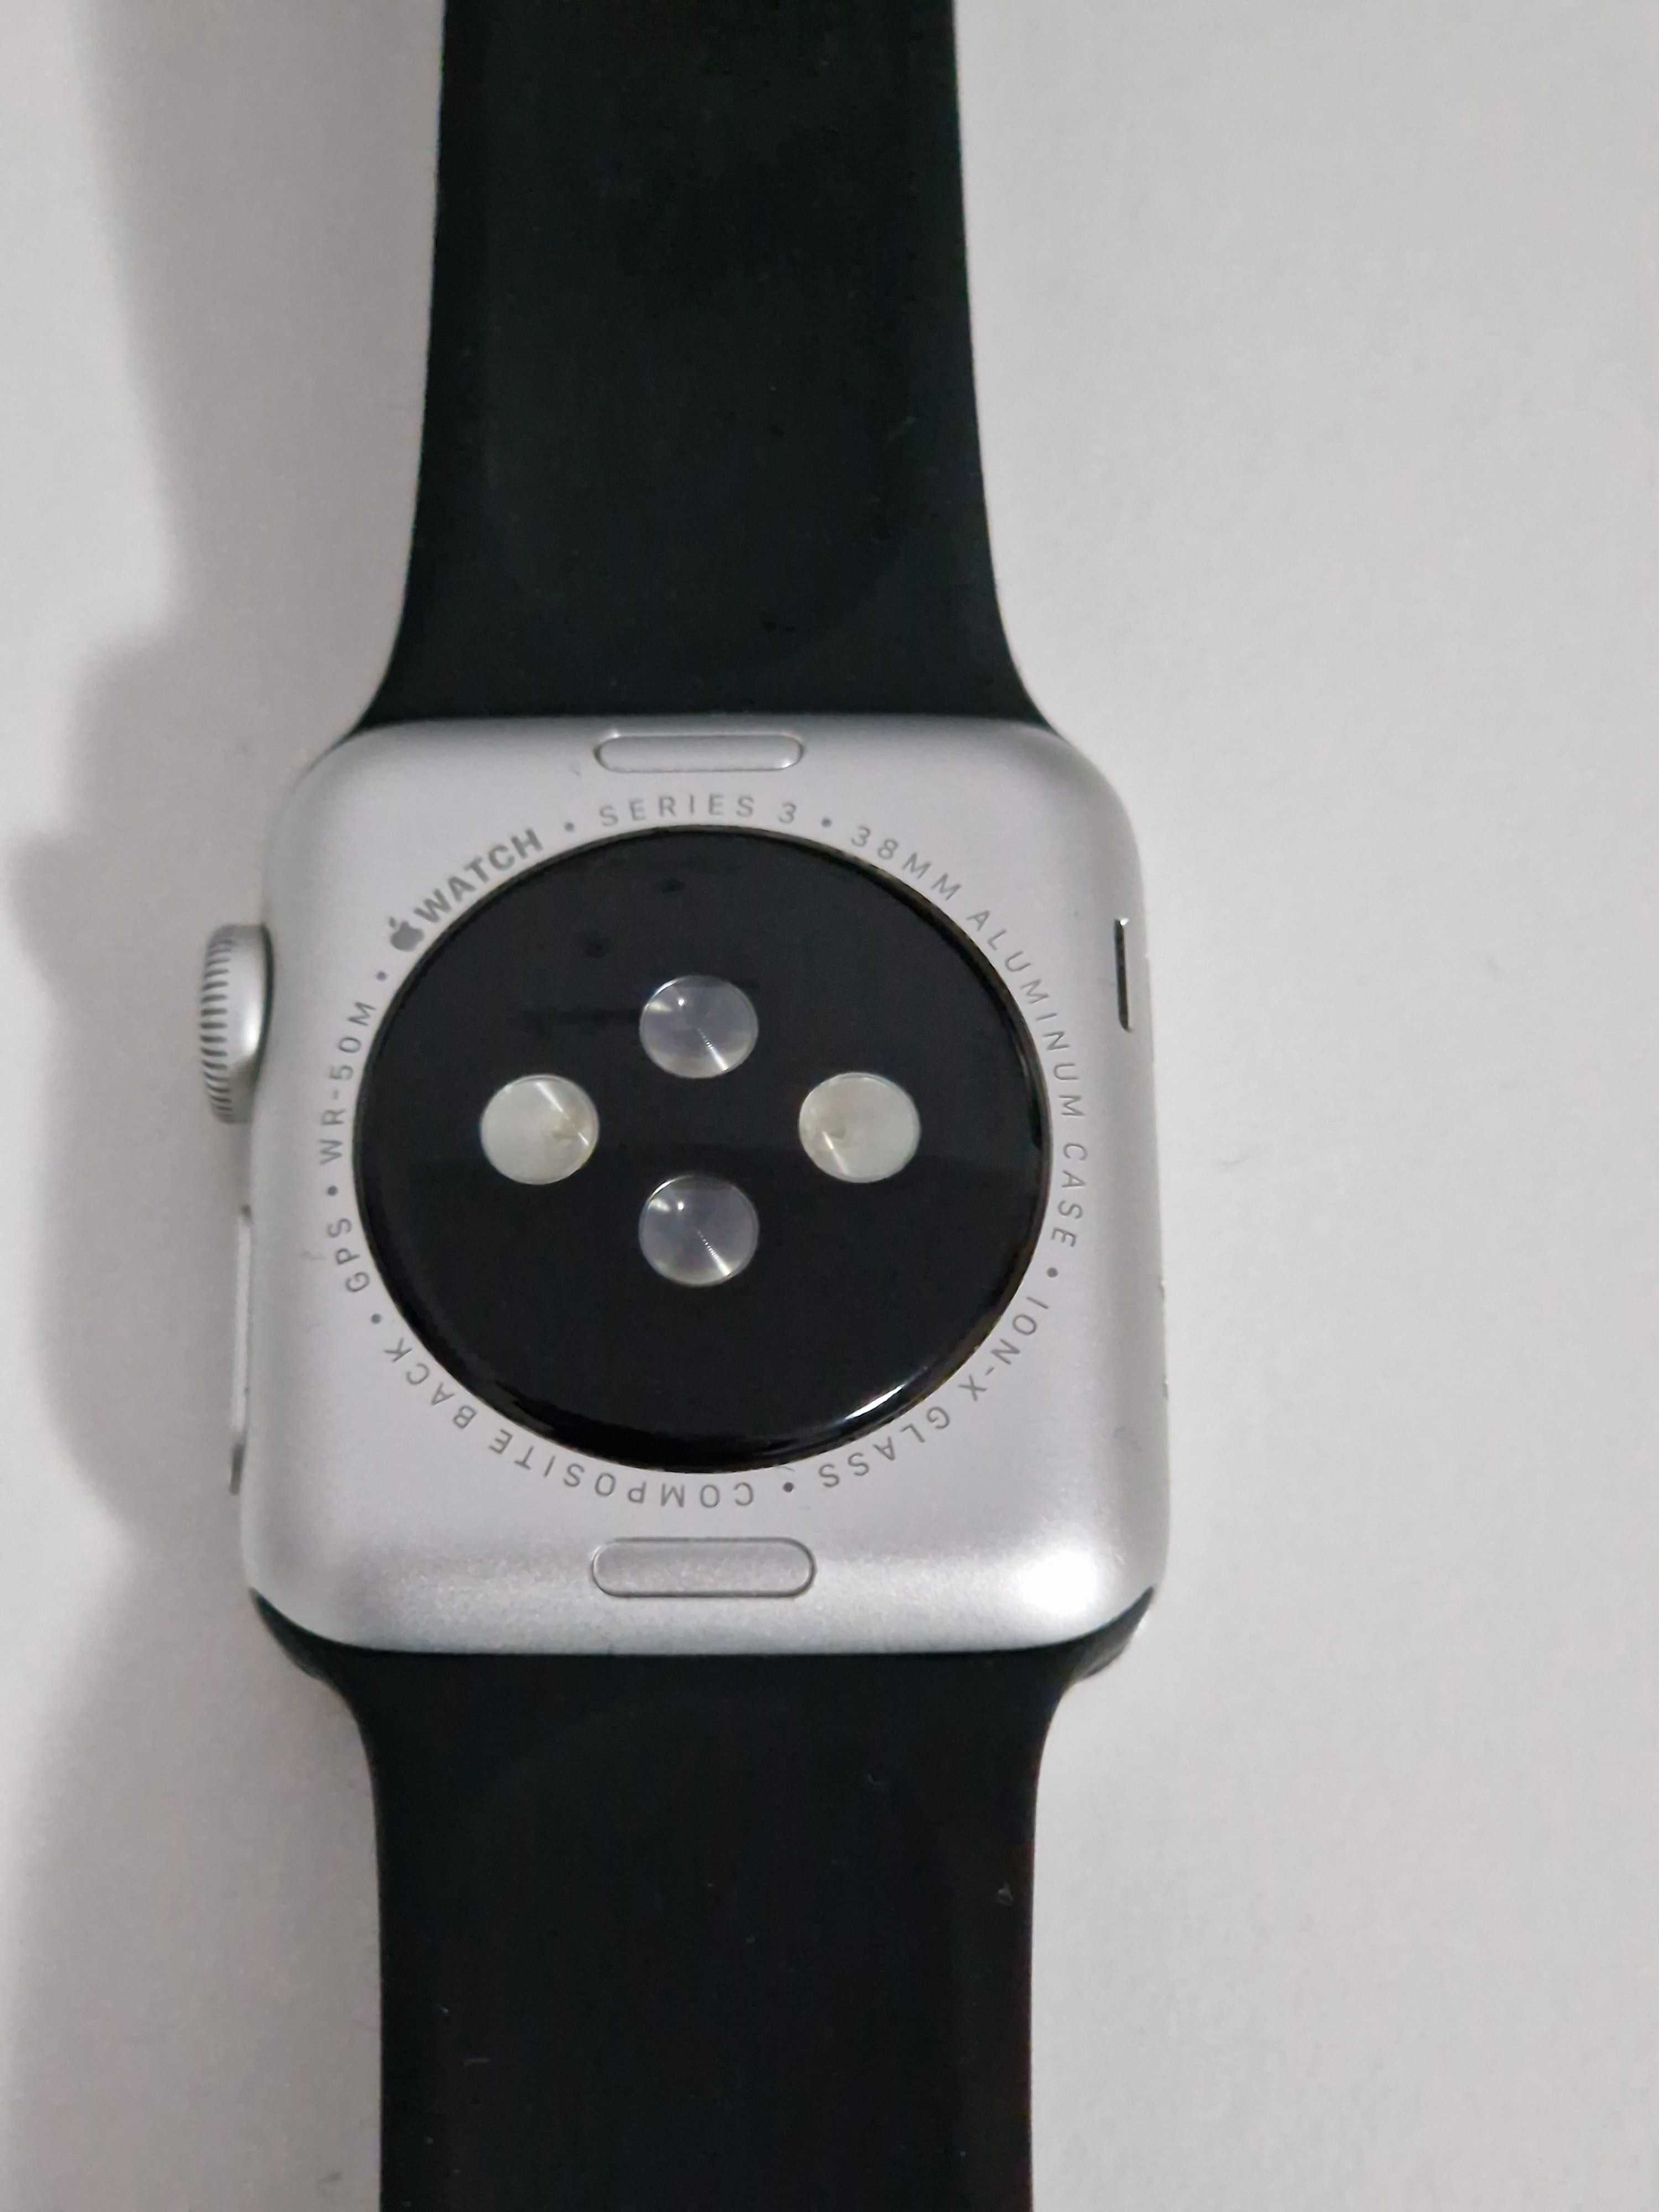 Apple Watch 3, GPS, Carcasa Silver Aluminium 38mm, White Sport Band